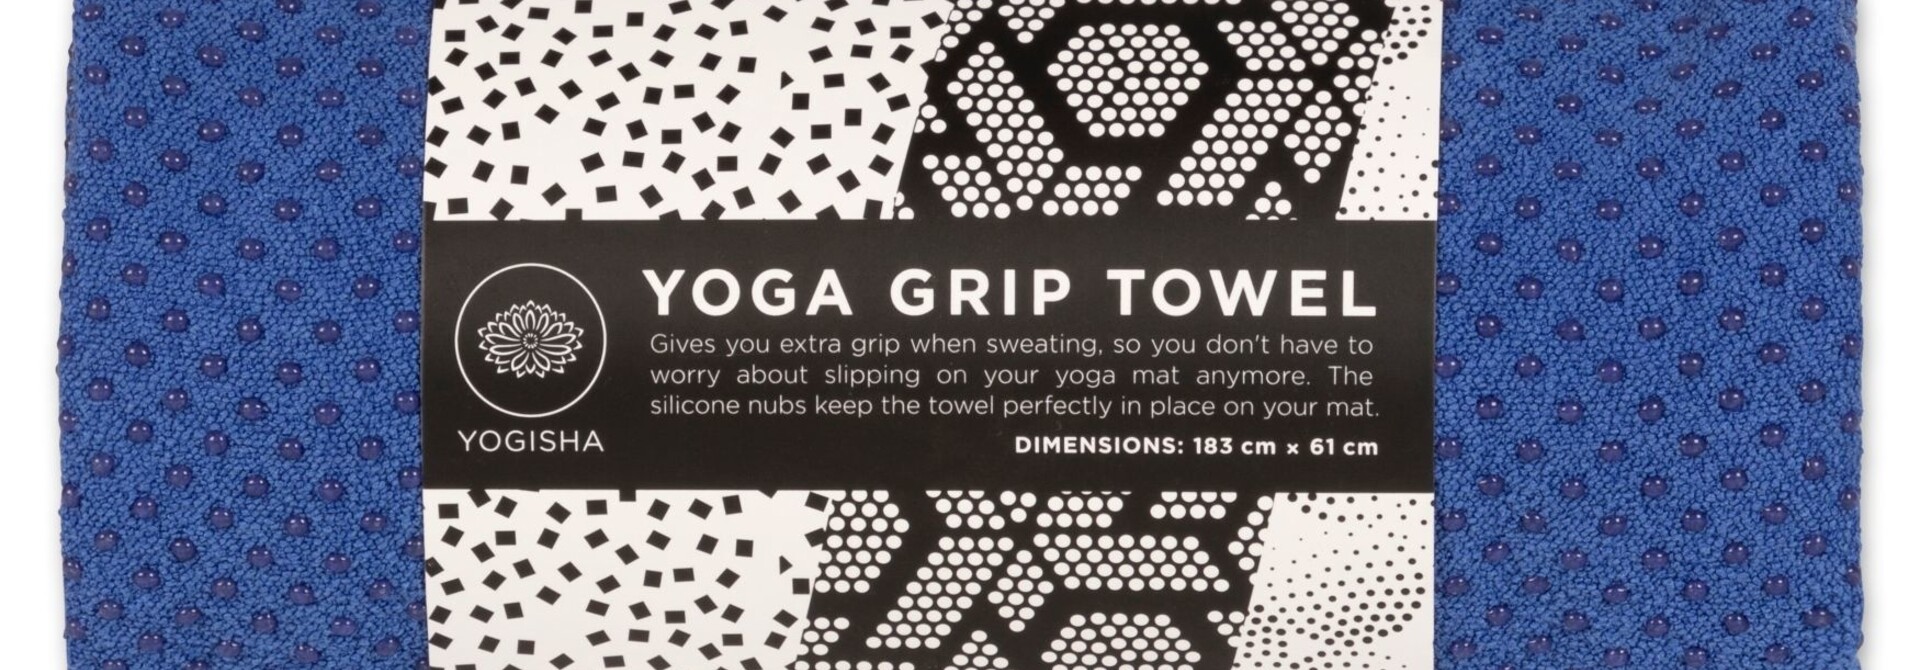 Yogisha Yoga Towel 1 + 1 free!